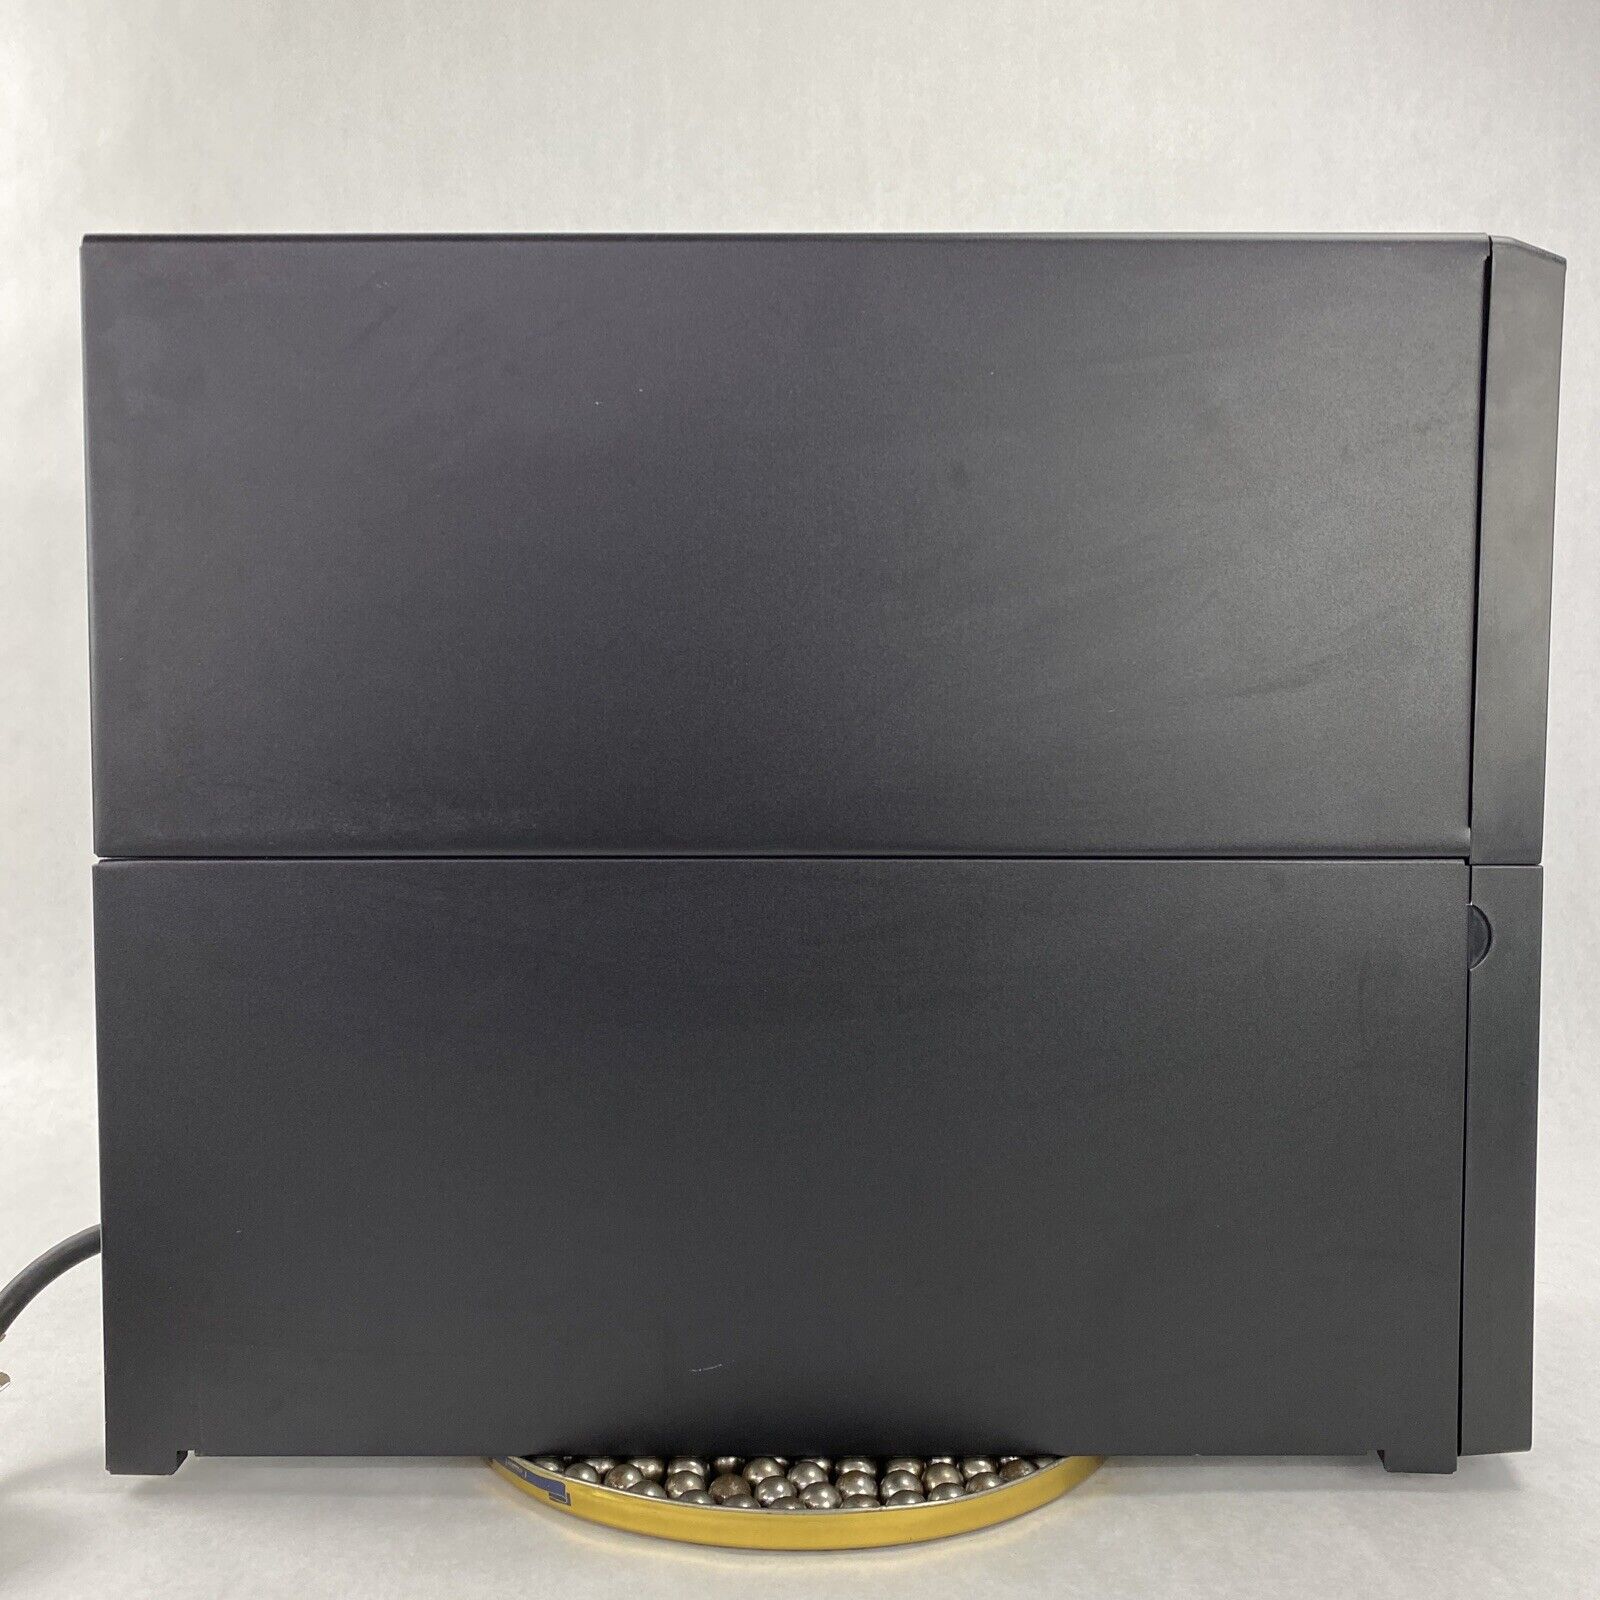 APC SMT2200 Smart UPS 2200 LCD 120V 1920W Battery Backup